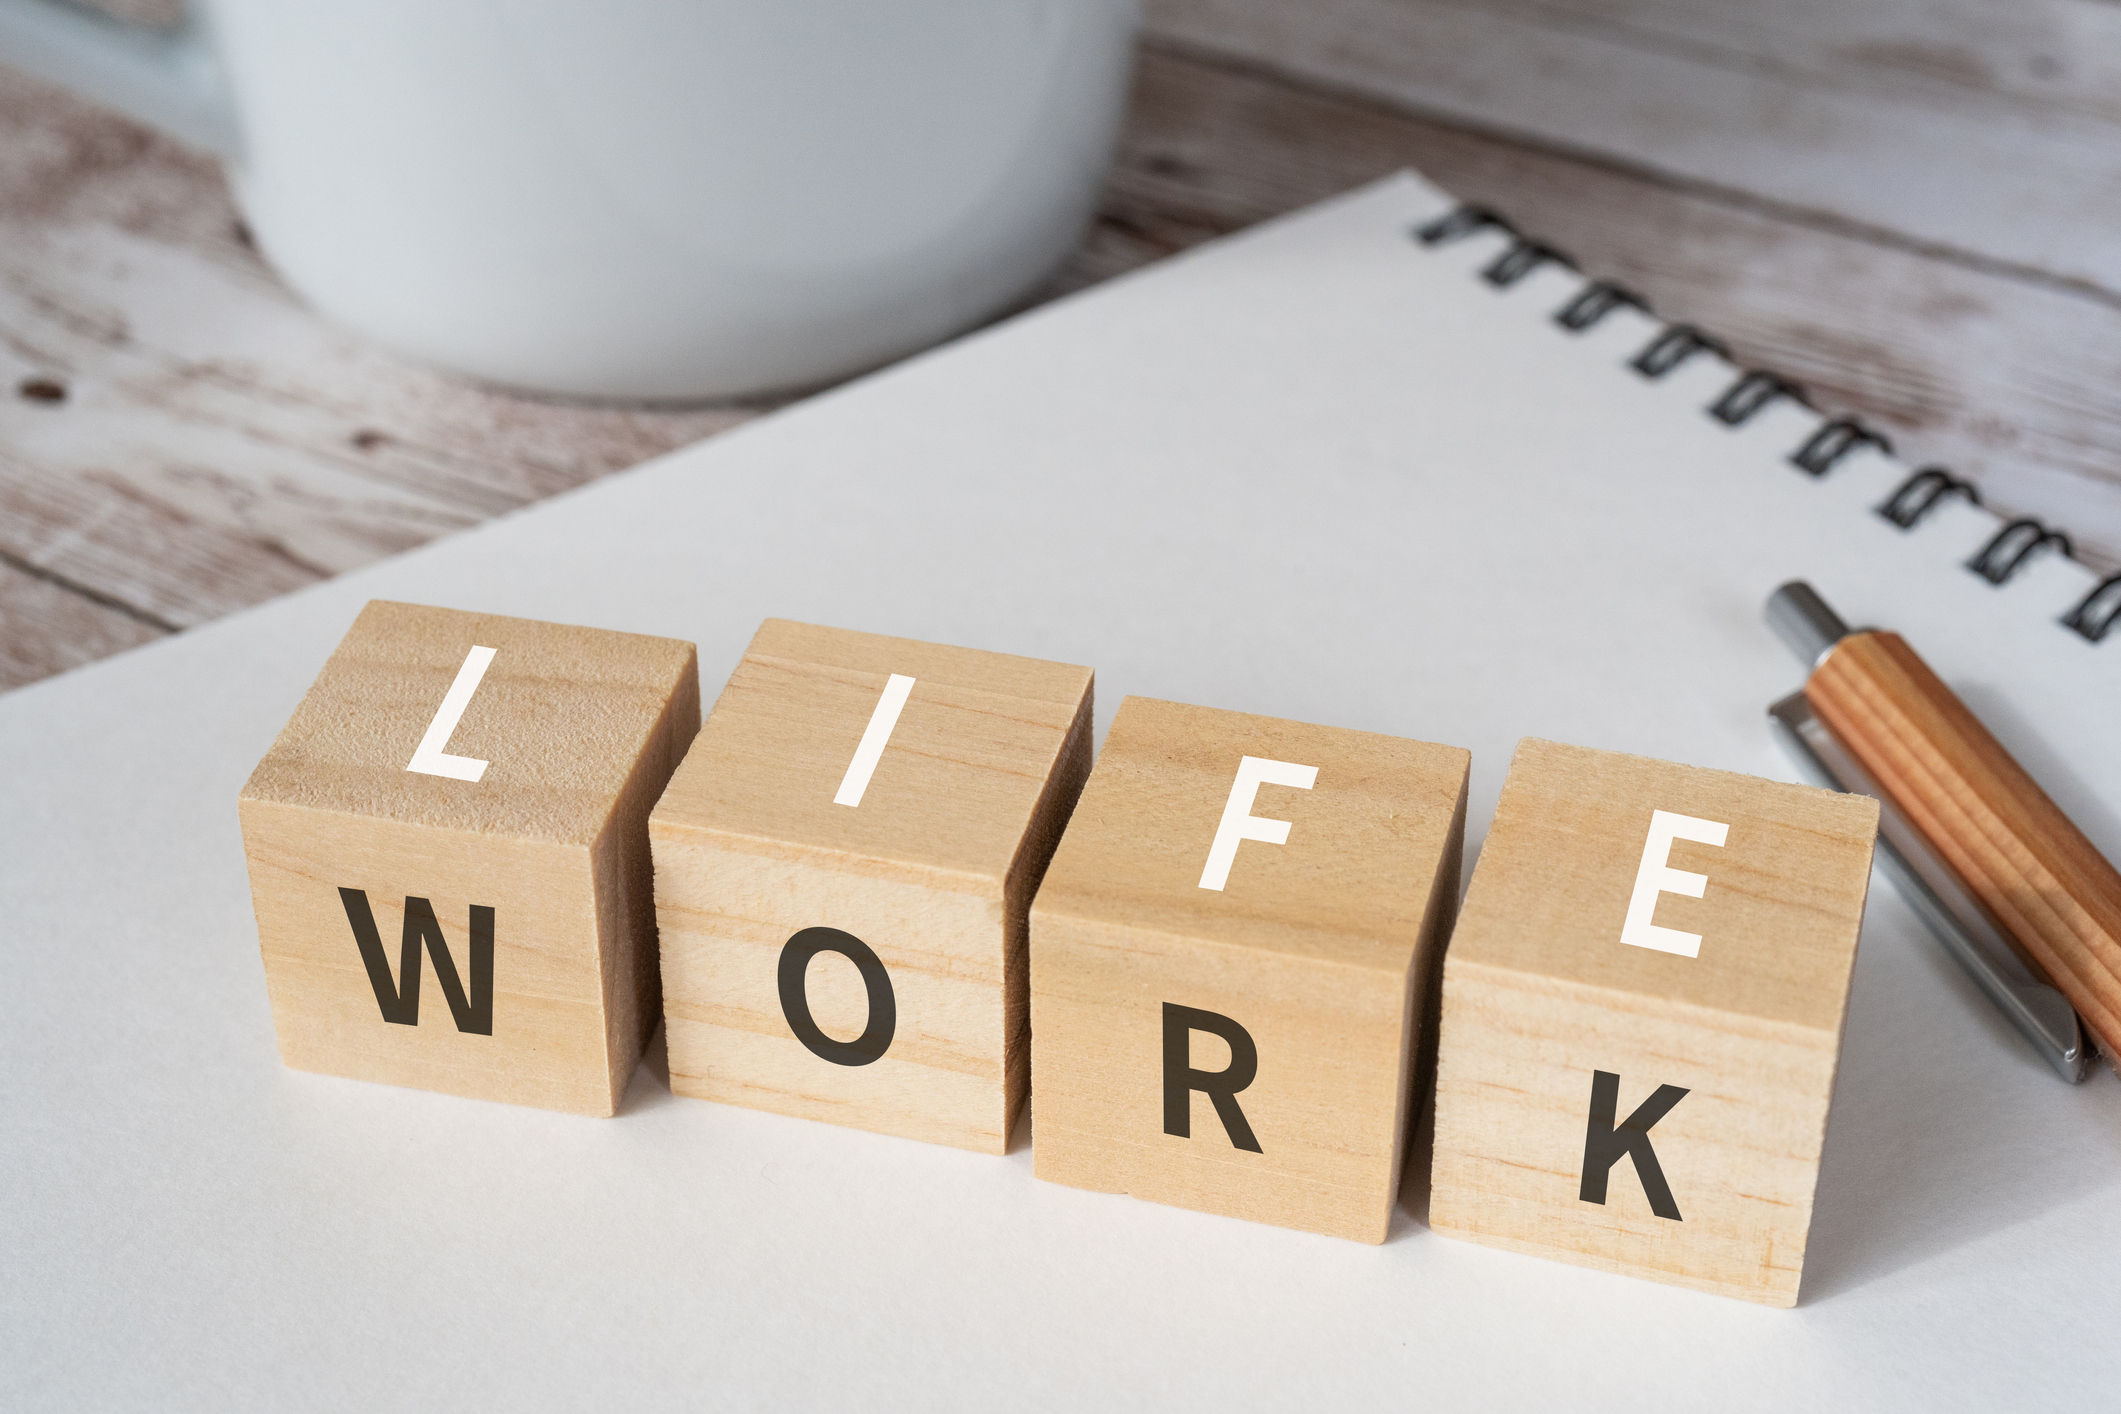 Teacher work-life balance